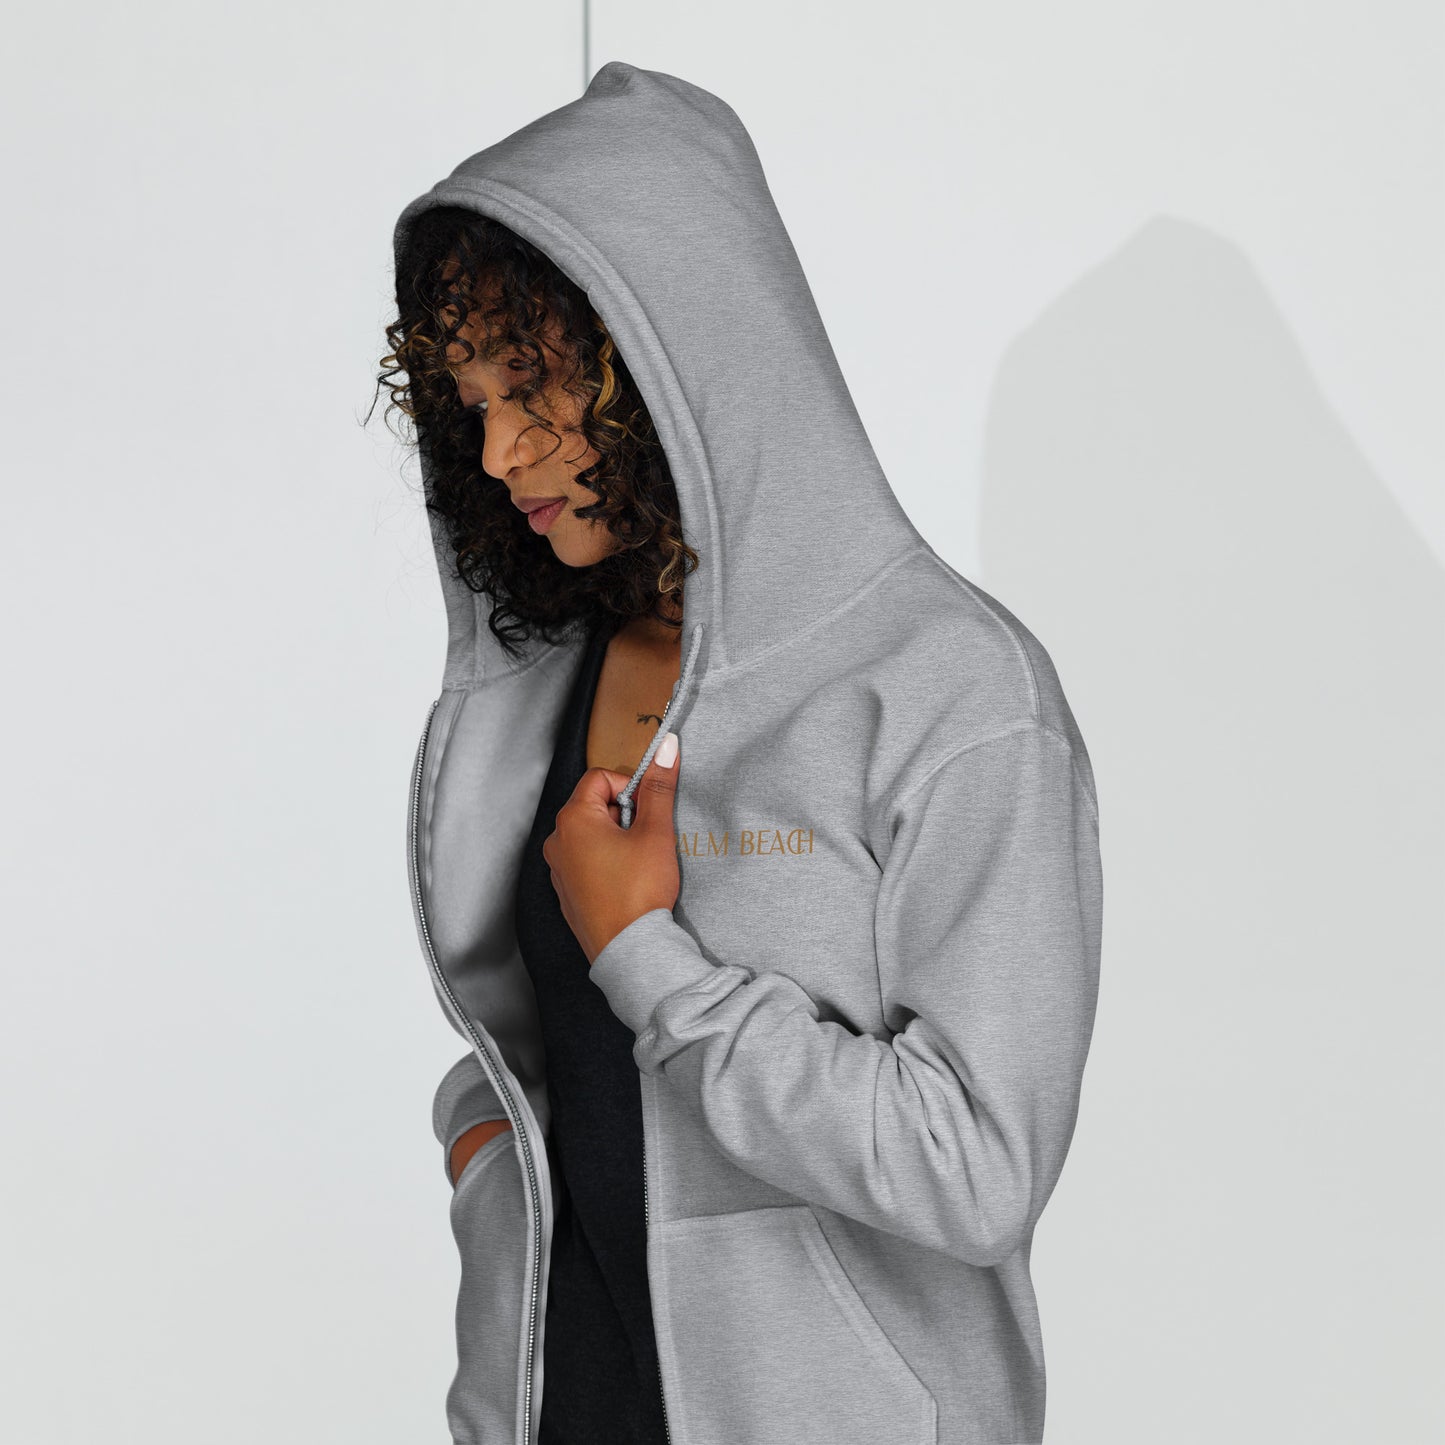 PALM BEACH Unisex heavy blend zip hoodie